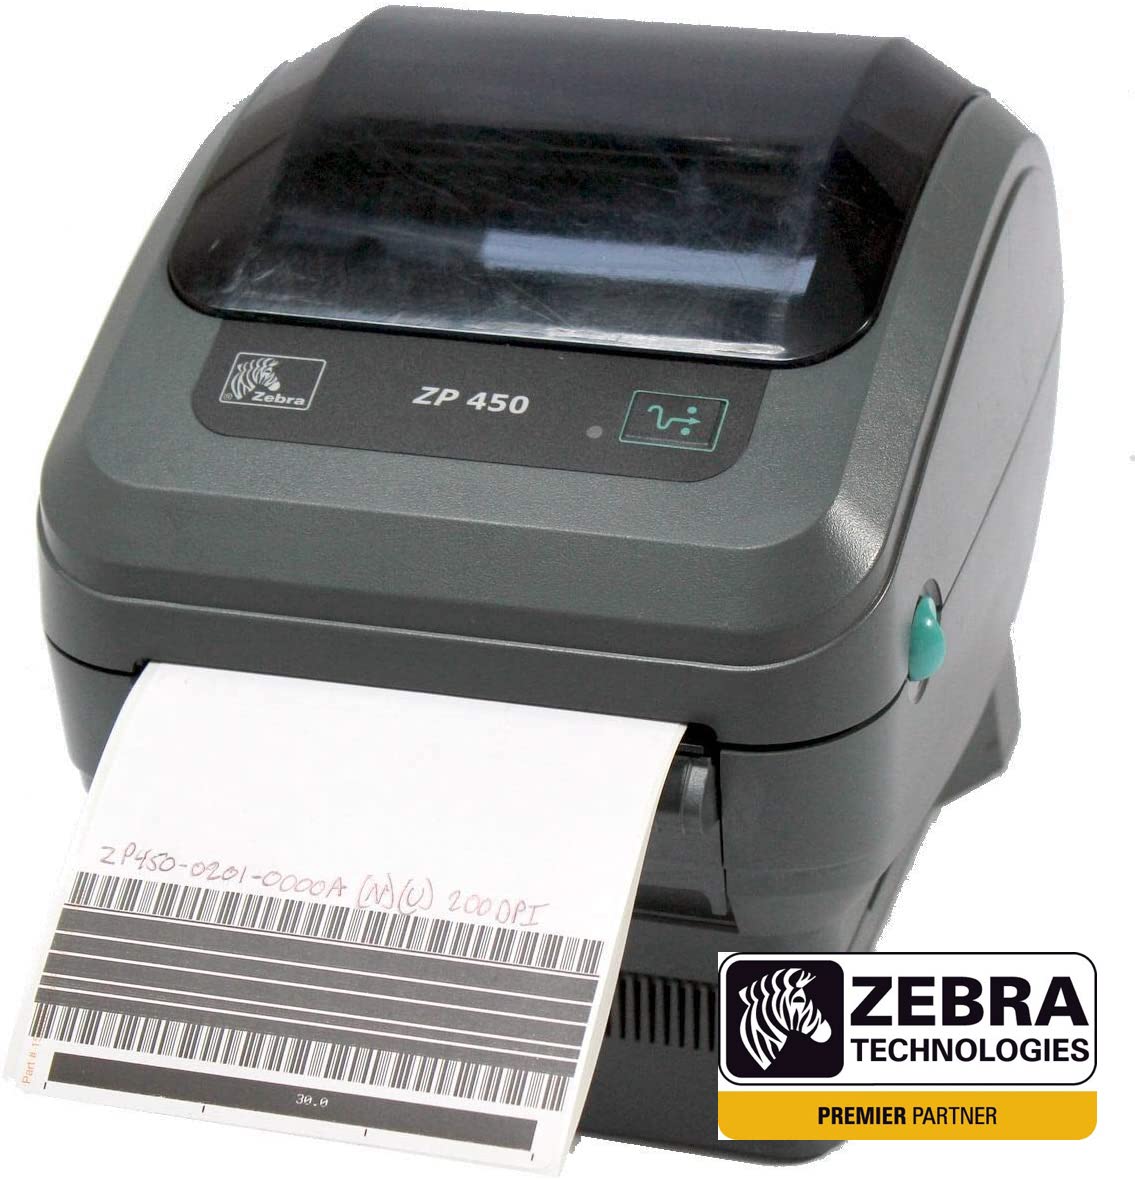 Zebra ZP450 CTP Thermal Label Printer for Shipping